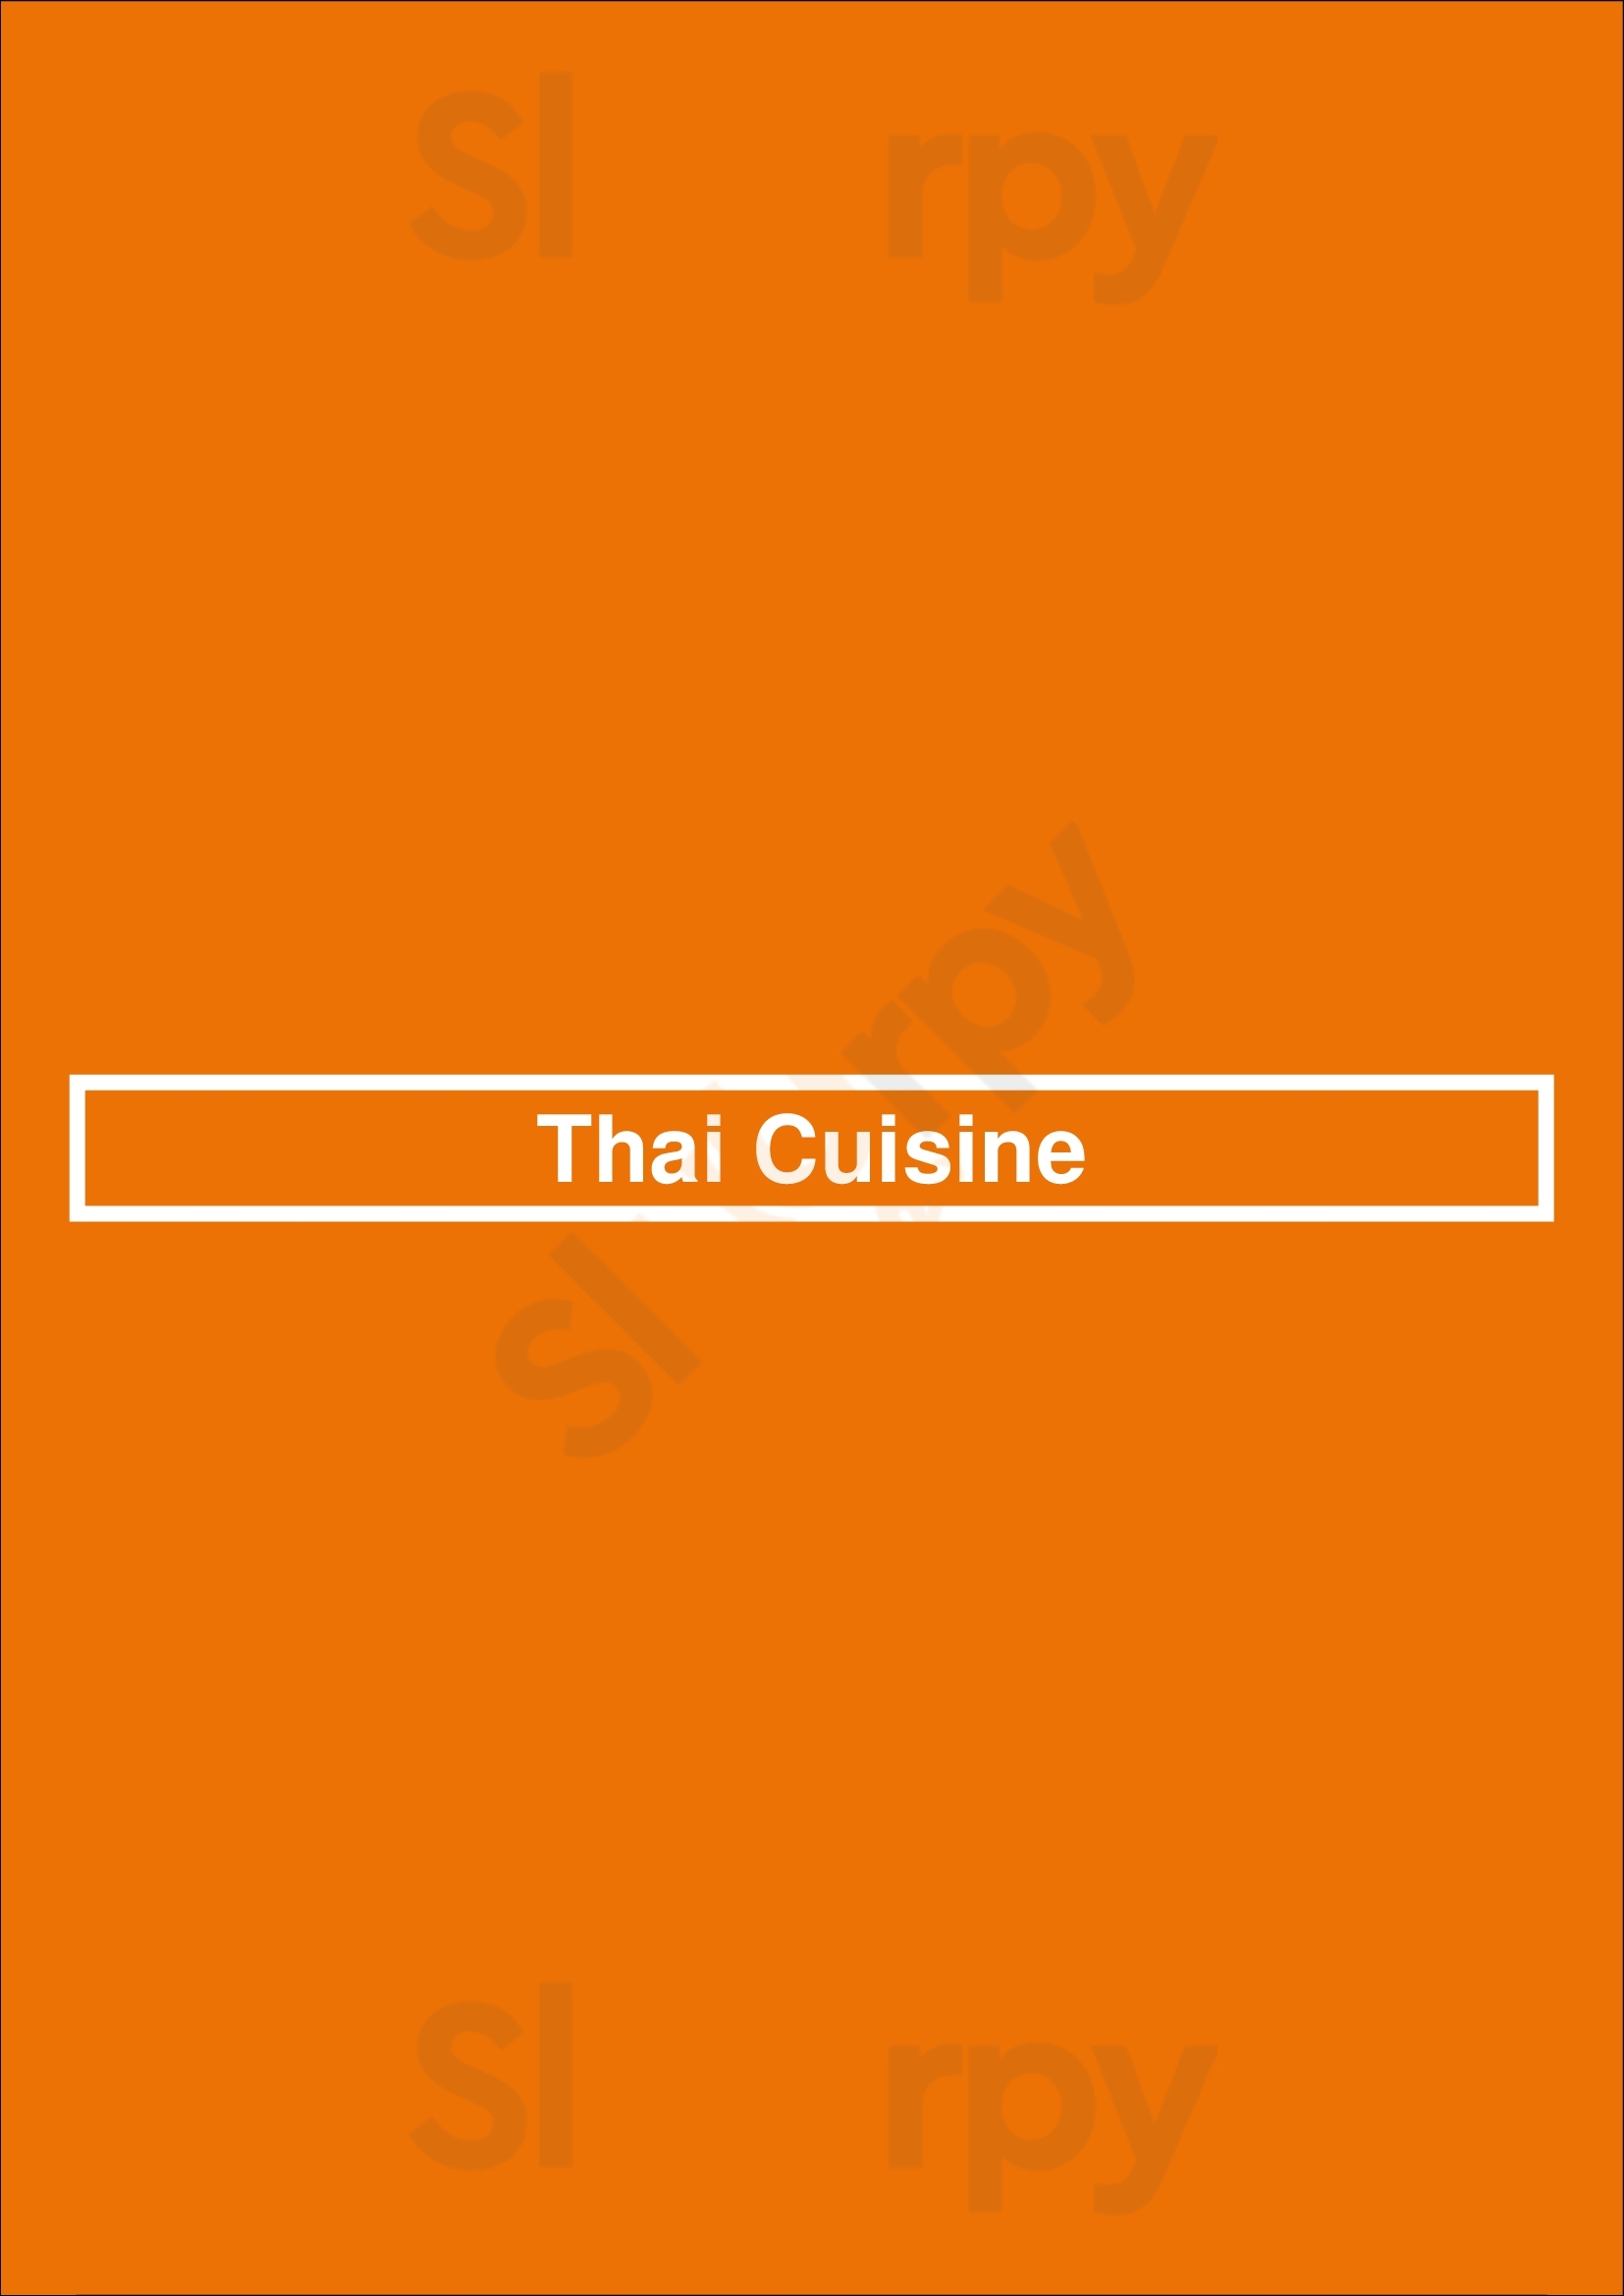 Thai Cuisine London Menu - 1